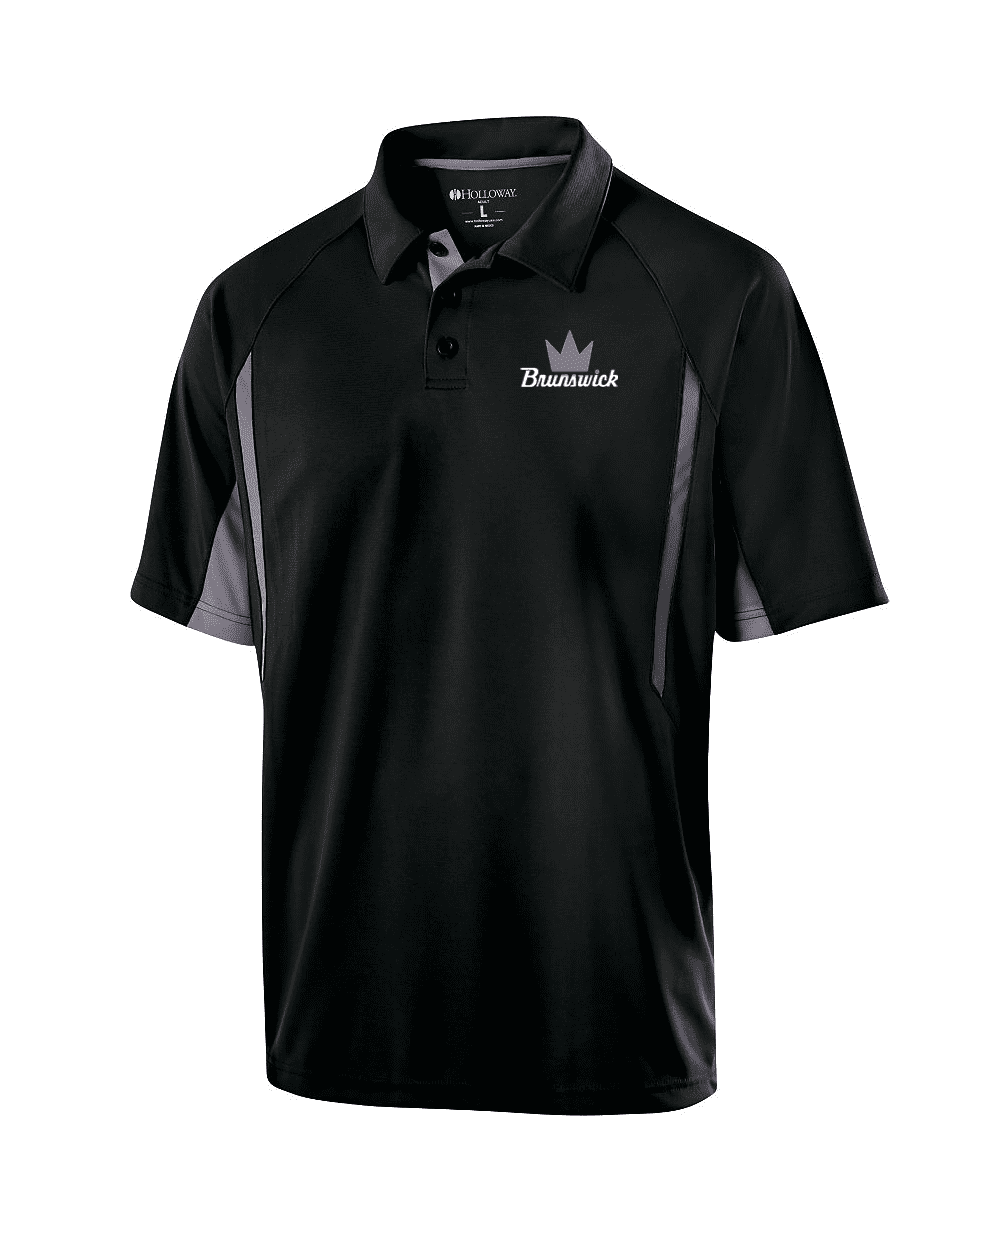 Team Brunswick Men's Inferno Performance Polo Bowling Shirt Dri-Fit Carbon Black 